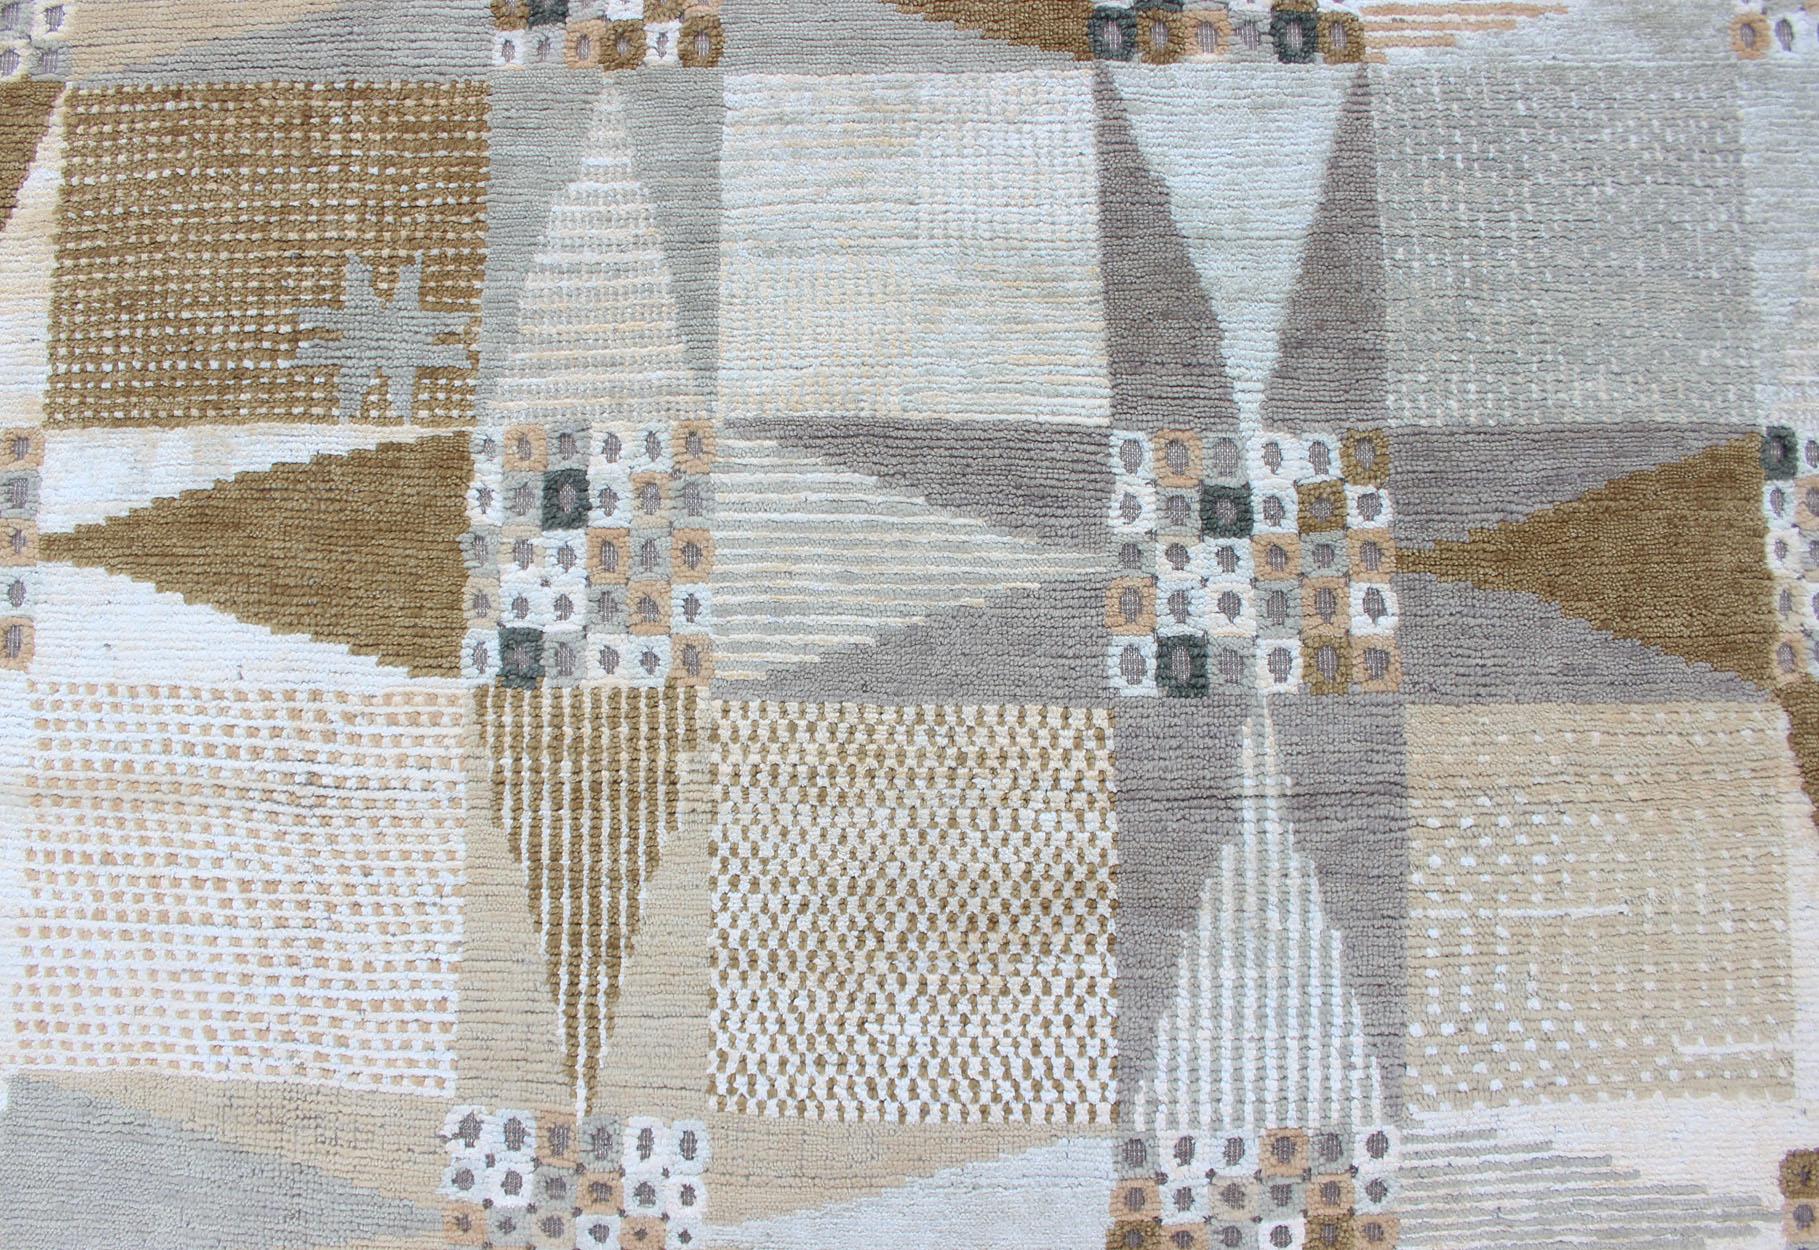 Keivan Woven Arts Piled Modern Scandinavian/Swedish Design Rug In Neutral Tones. Keivan Woven Arts / rug RJK-29646, country of origin / type: India / Scandinavian piled rug. 
Measures: 9'0 x 12'0 
This Scandinavian Pile rug is inspired by the work